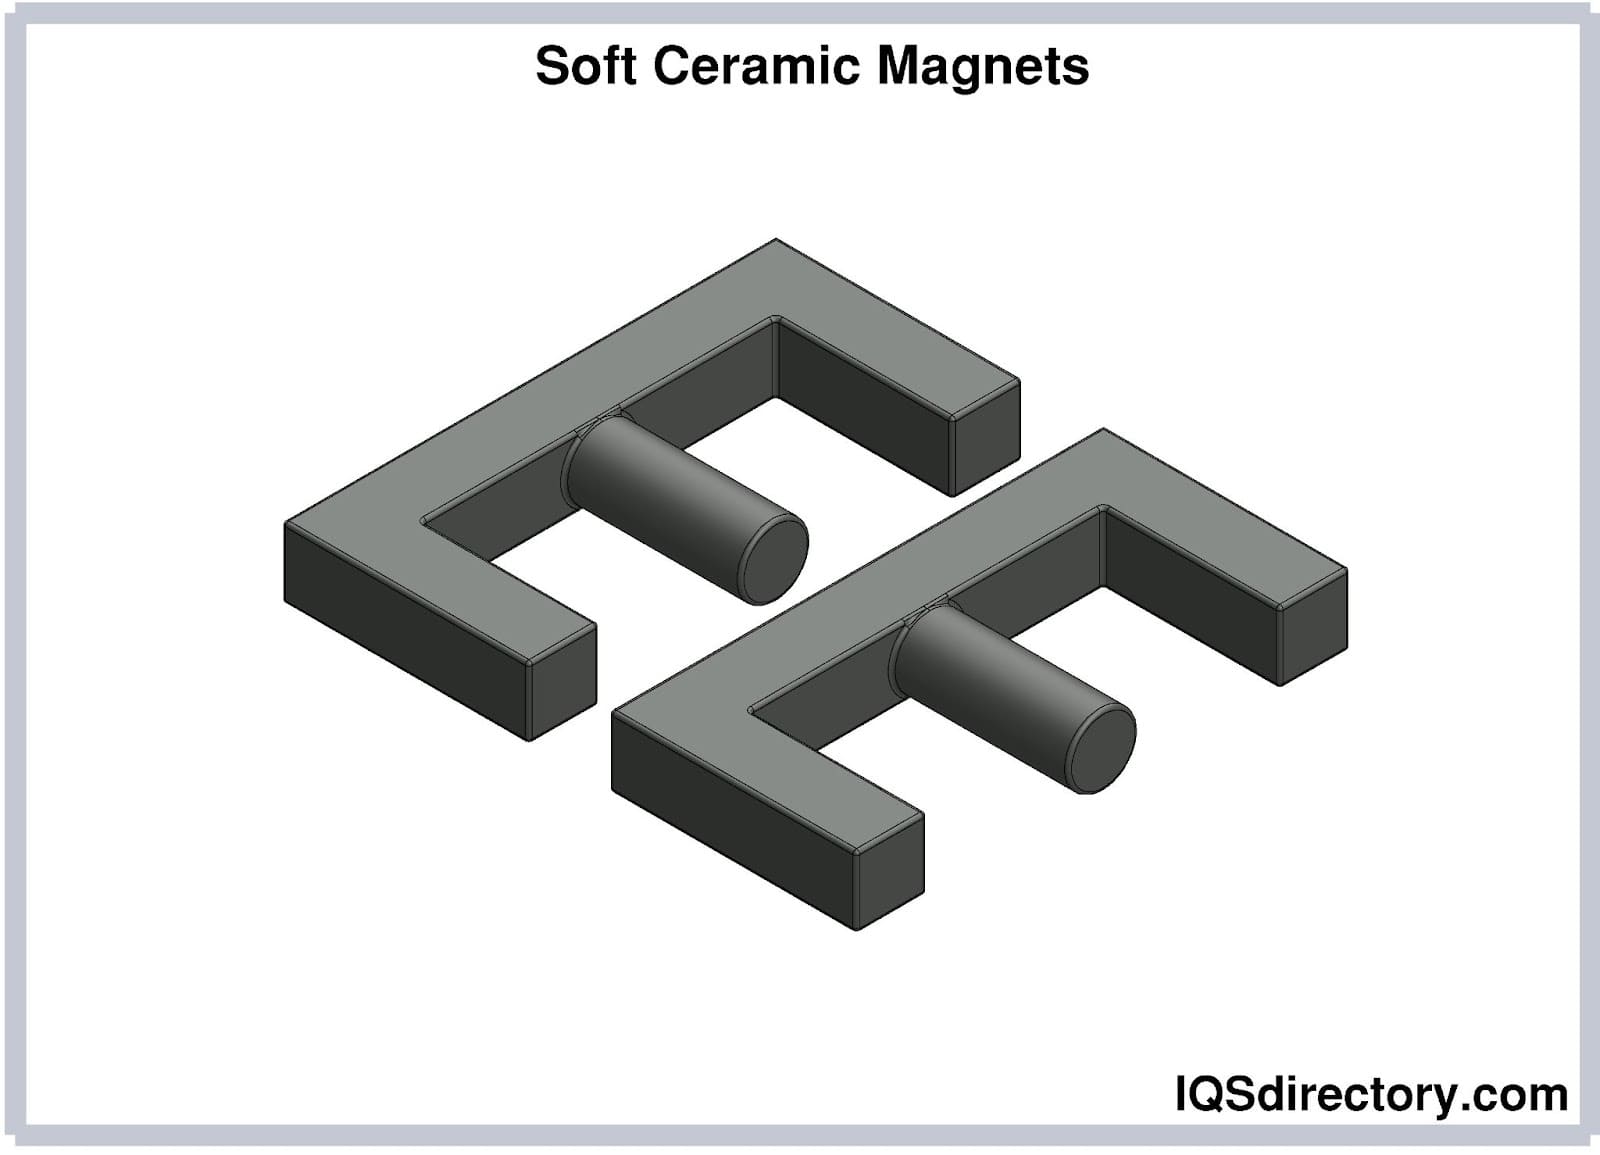 Soft Ceramic Magnets